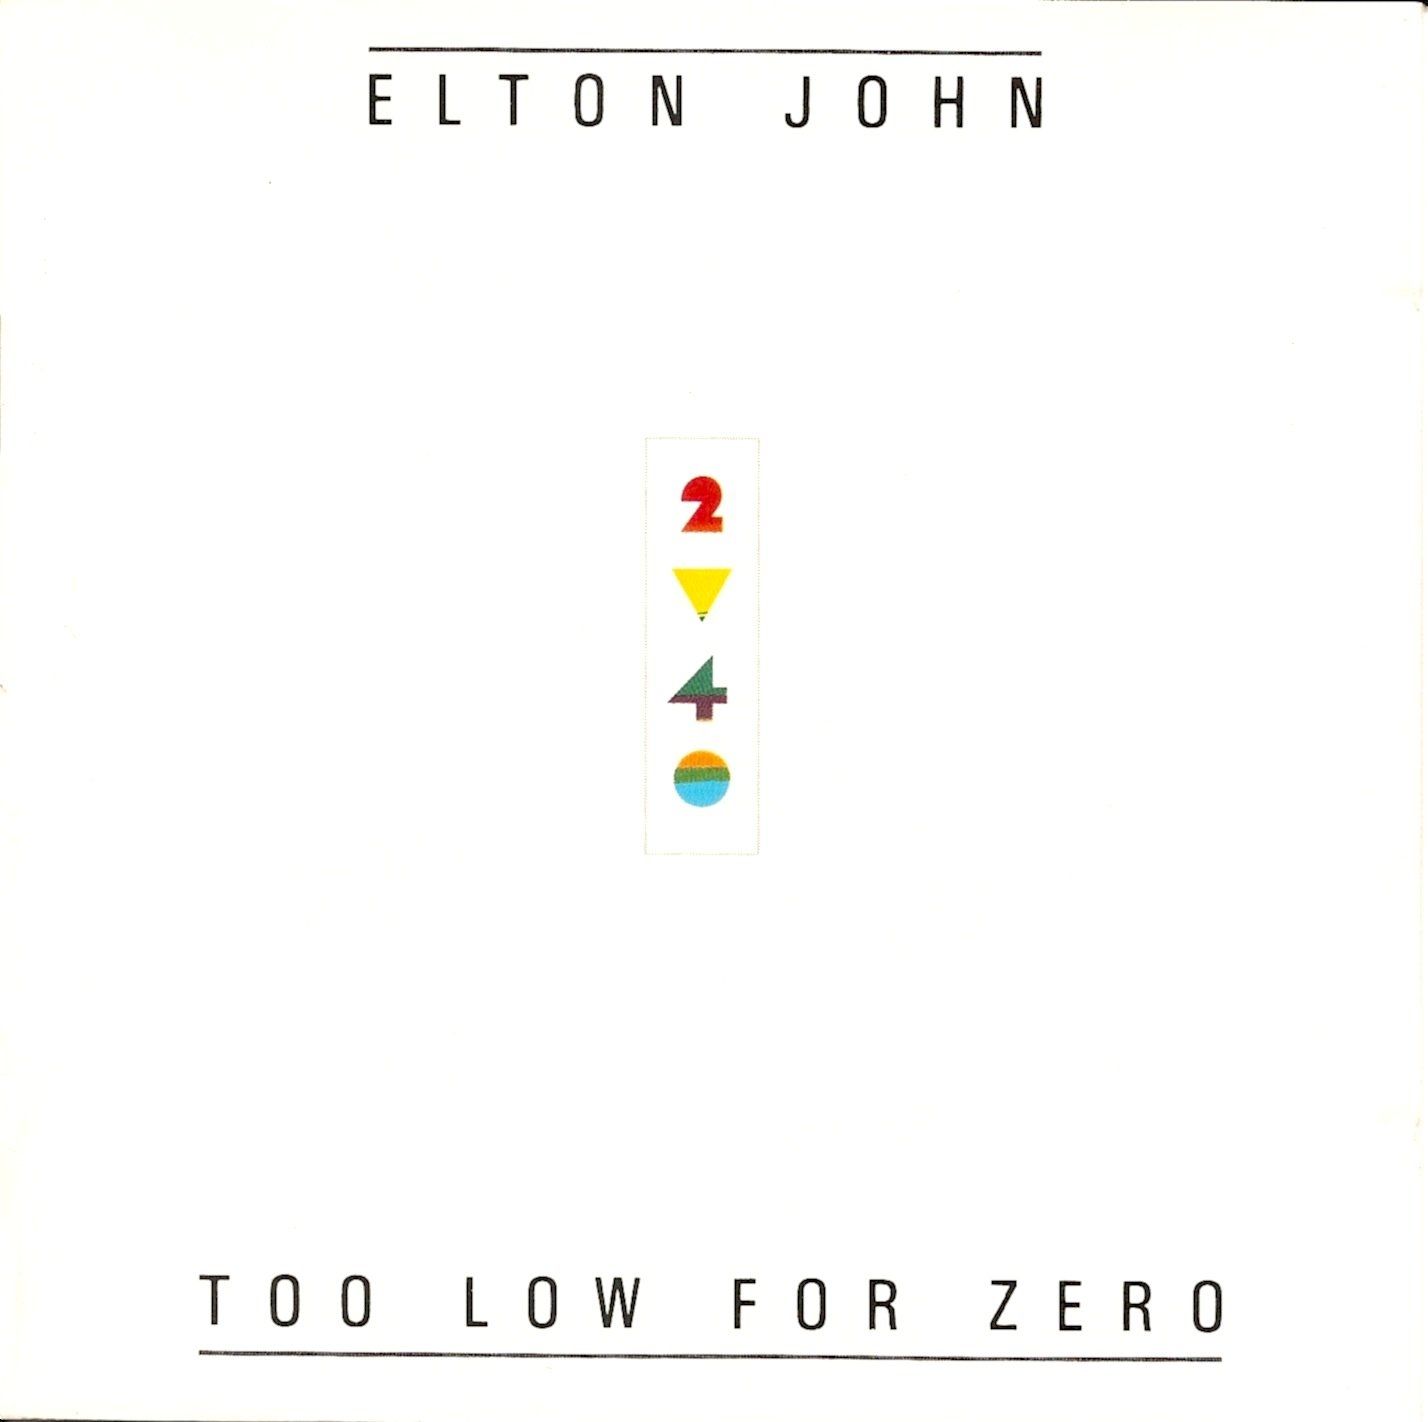 Elton John Letrascom 658 Canciones